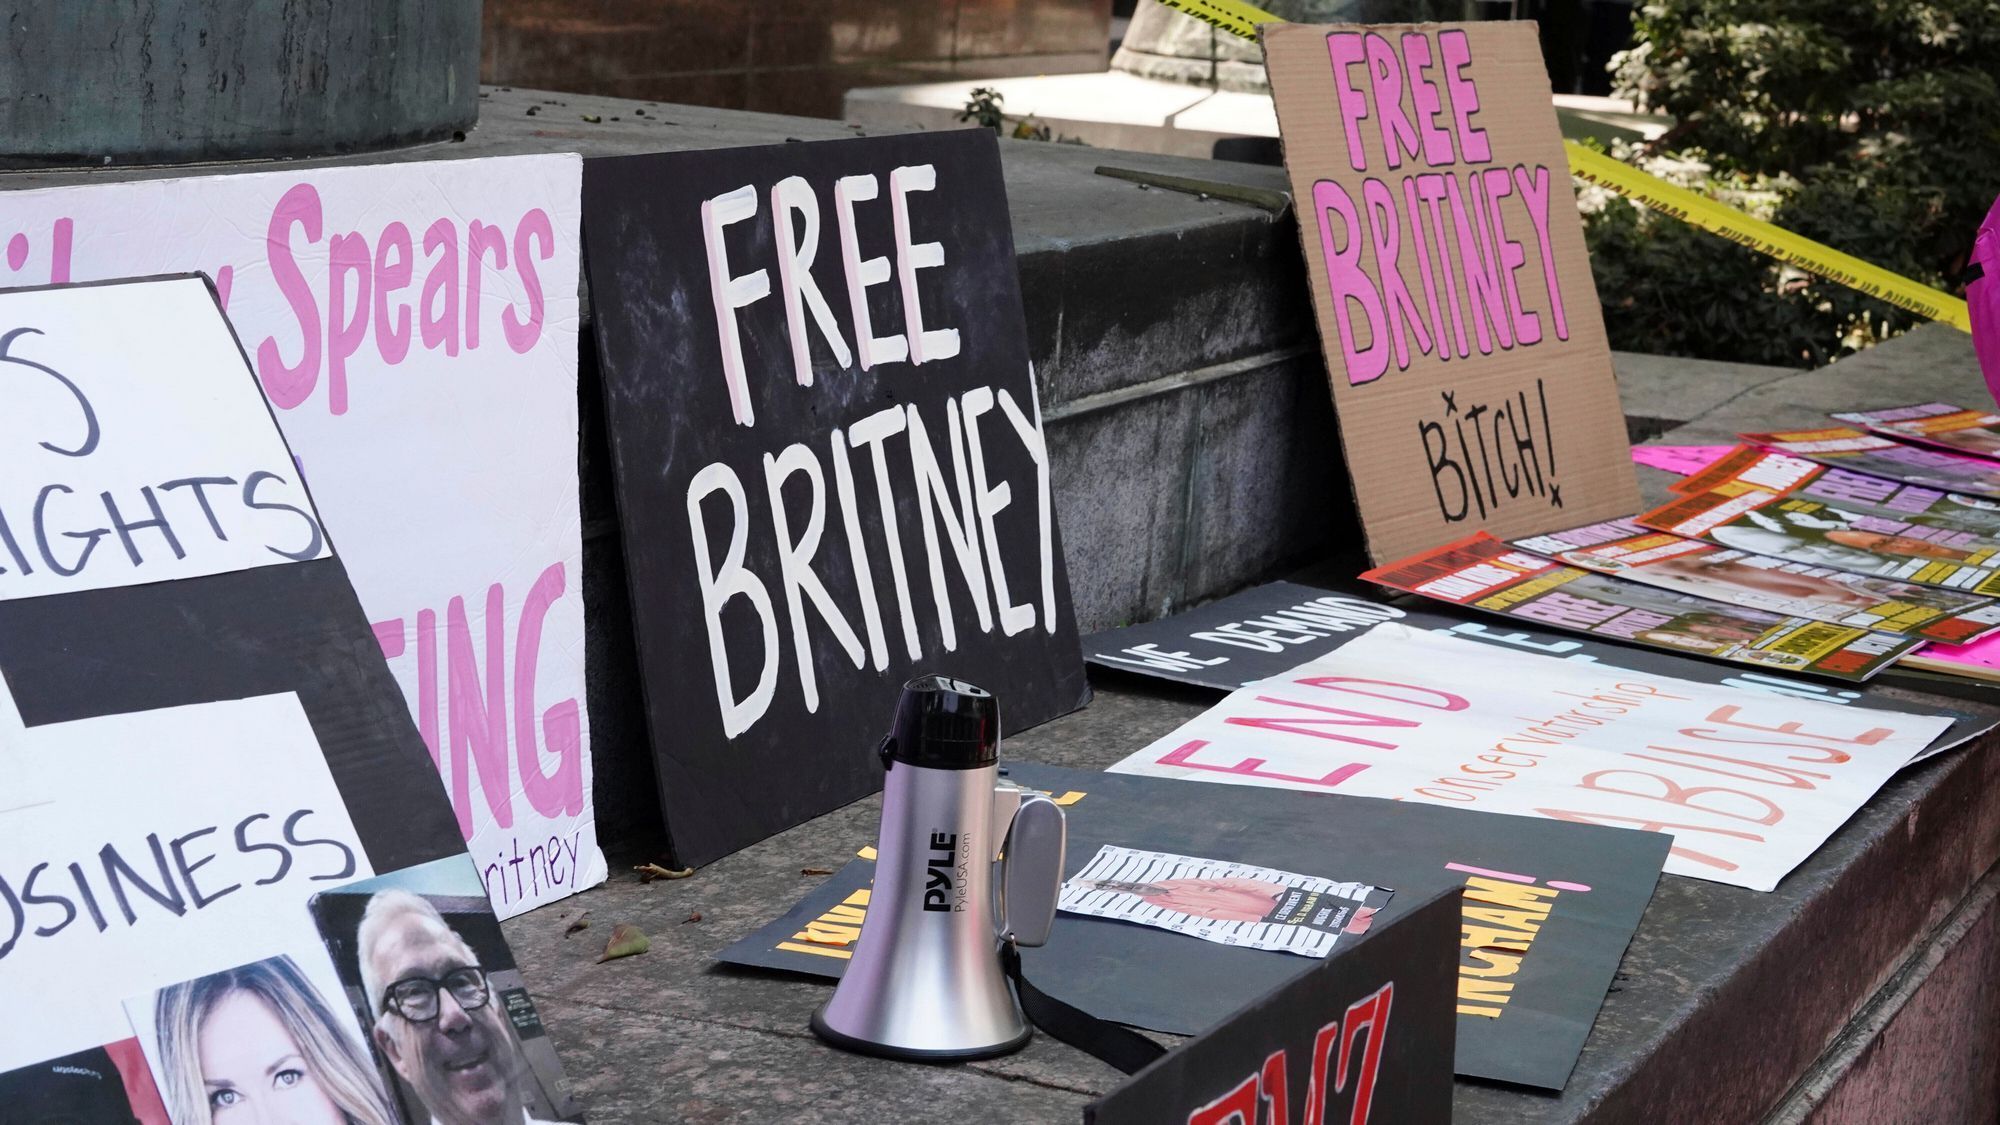 Free Britney Spears Demonstration